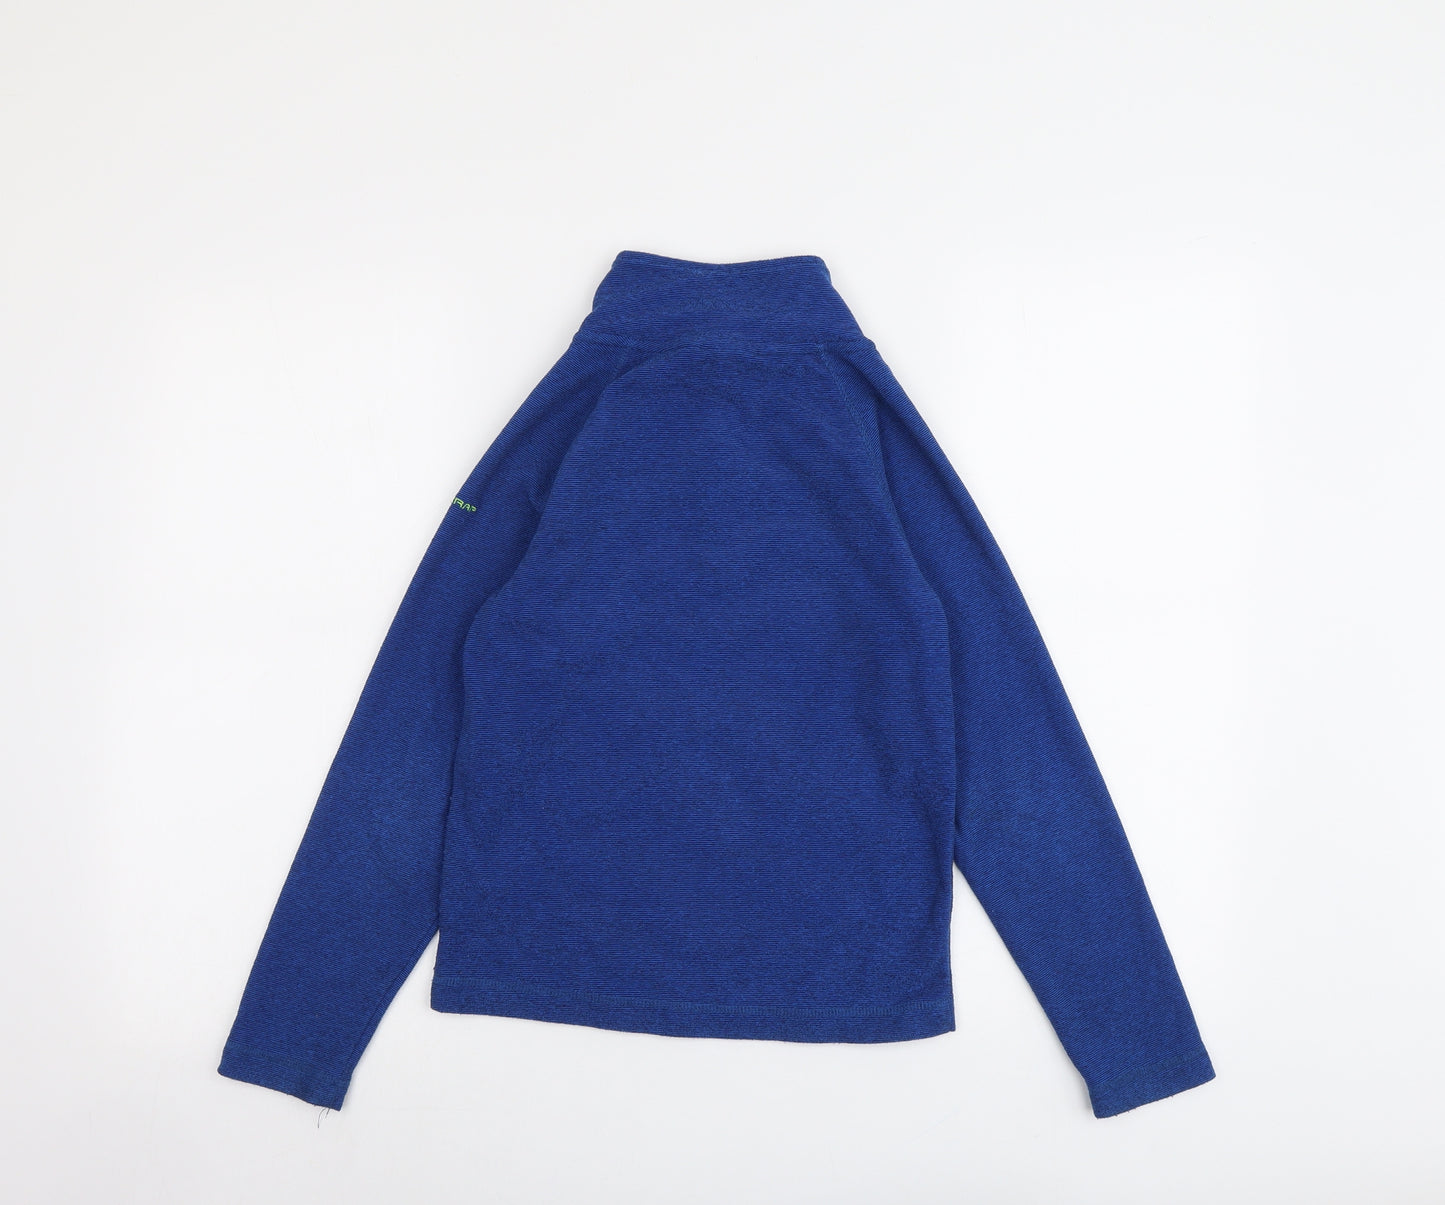 Trespass Boys Blue Polyester Pullover Sweatshirt Size 9-10 Years Zip